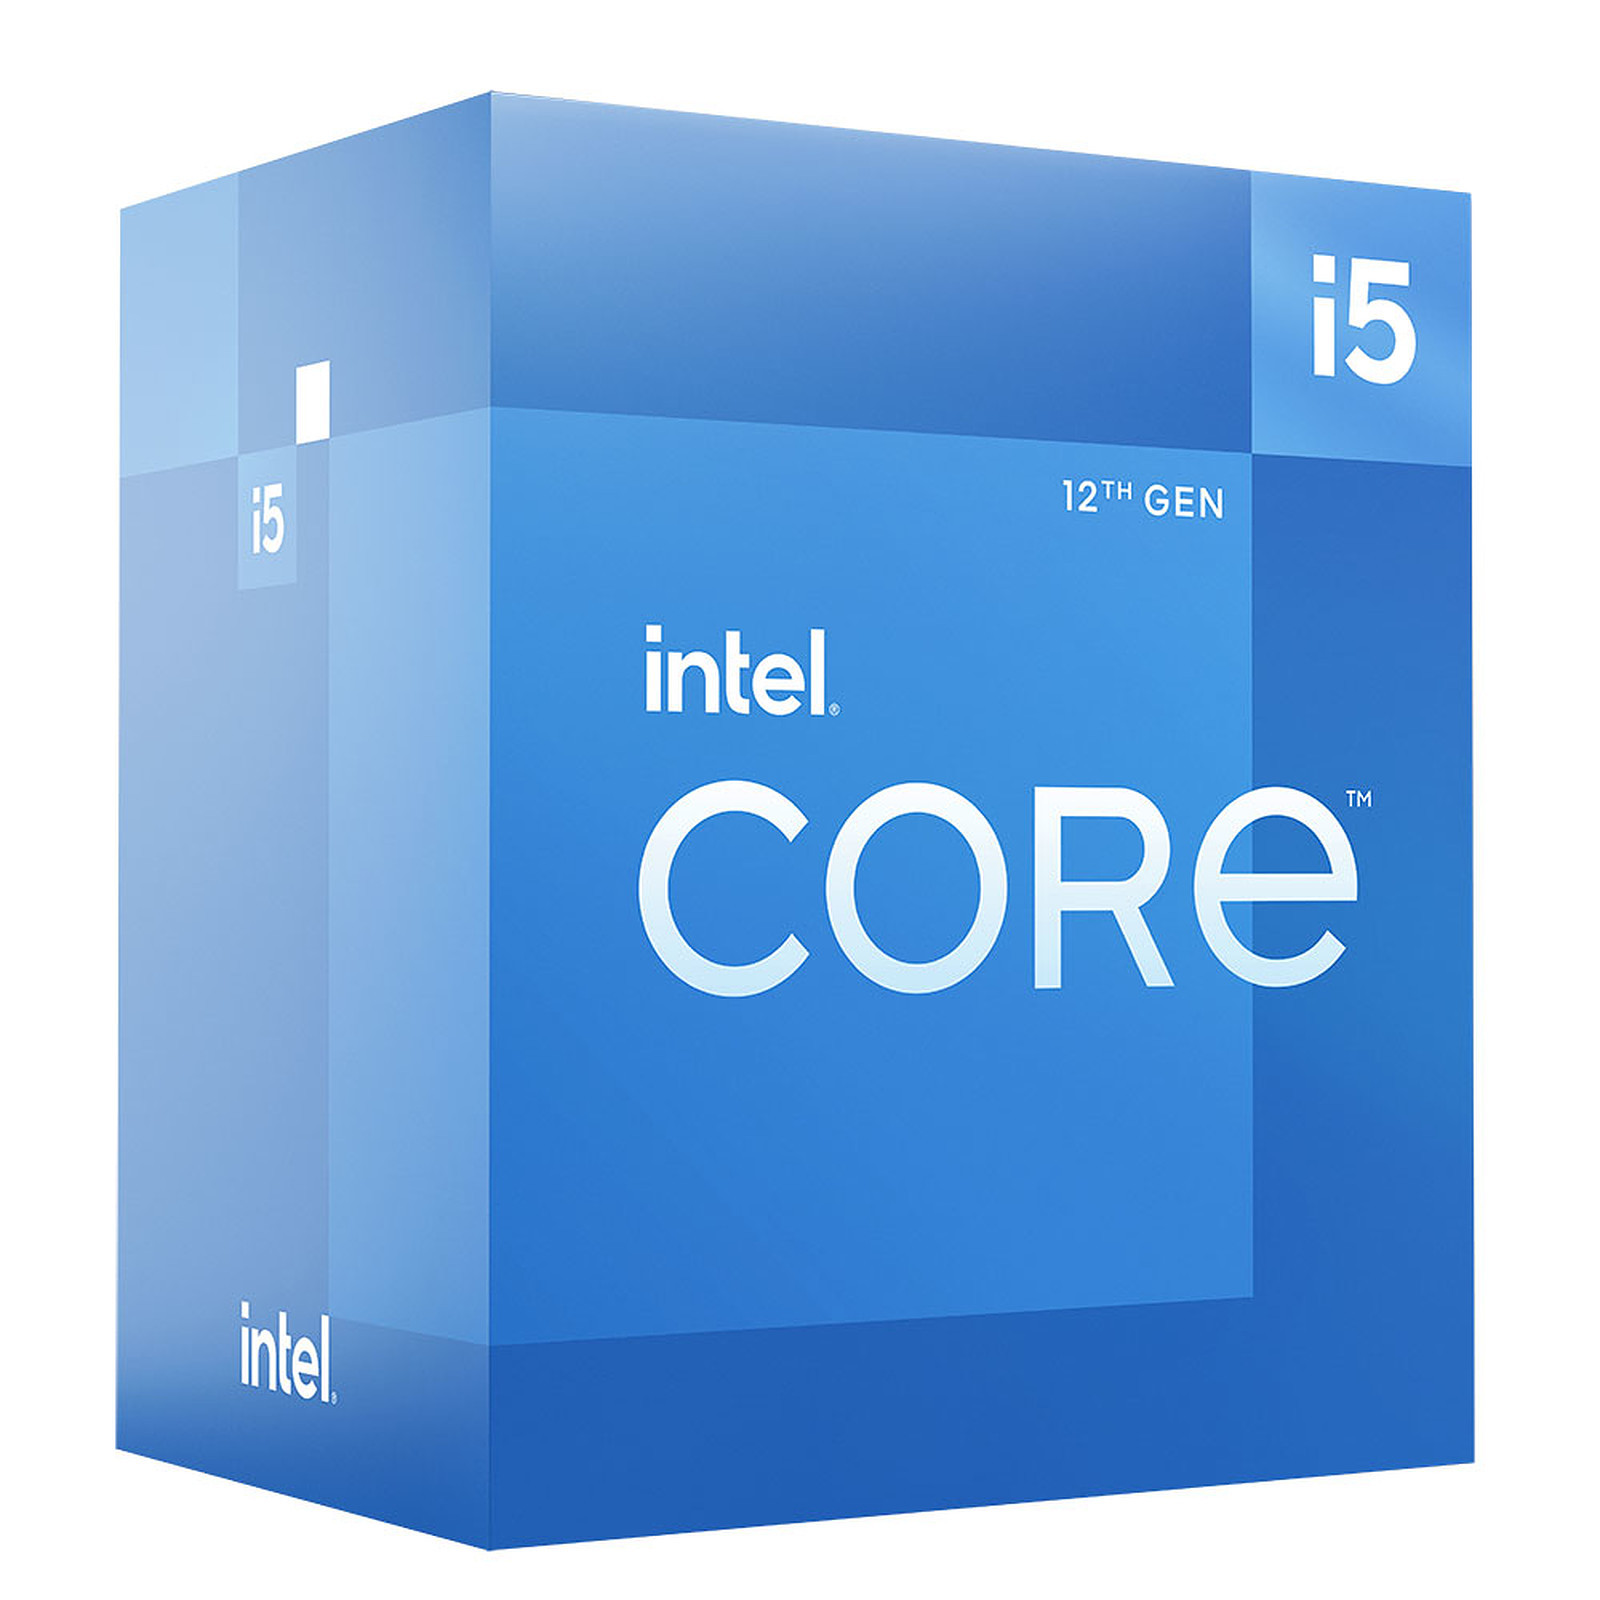 Imagen PC Core i5 12400, Ram 8gb, Solido 256, Fuente Real 500, Chasis 4 Fan RGB 2